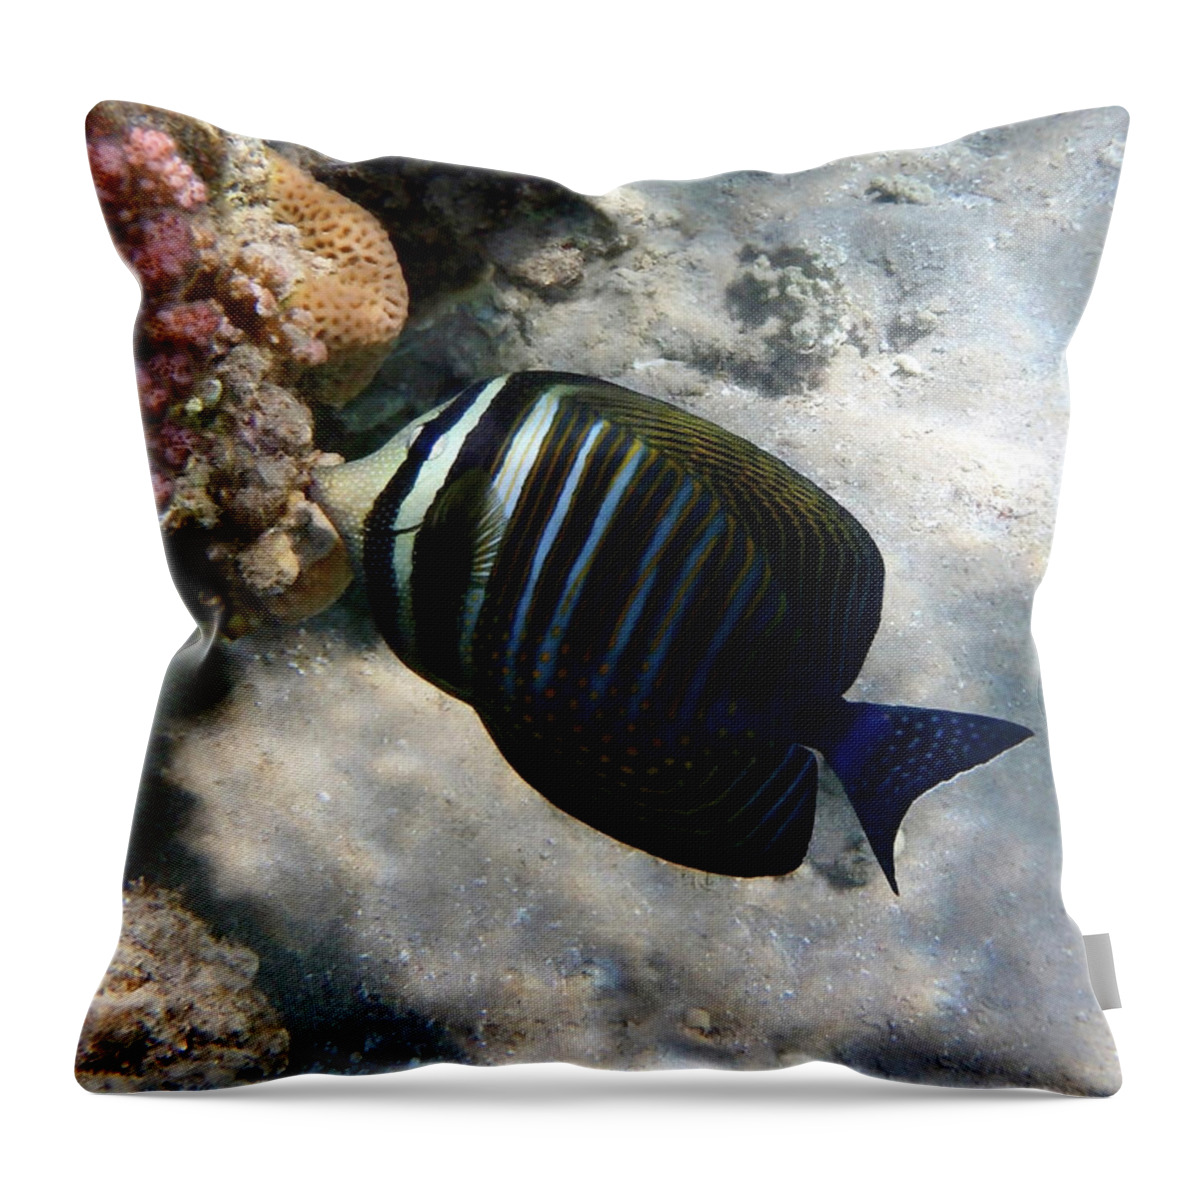 Underwater Throw Pillow featuring the photograph Red Sea Sailfin Tang Makadi Bay by Johanna Hurmerinta